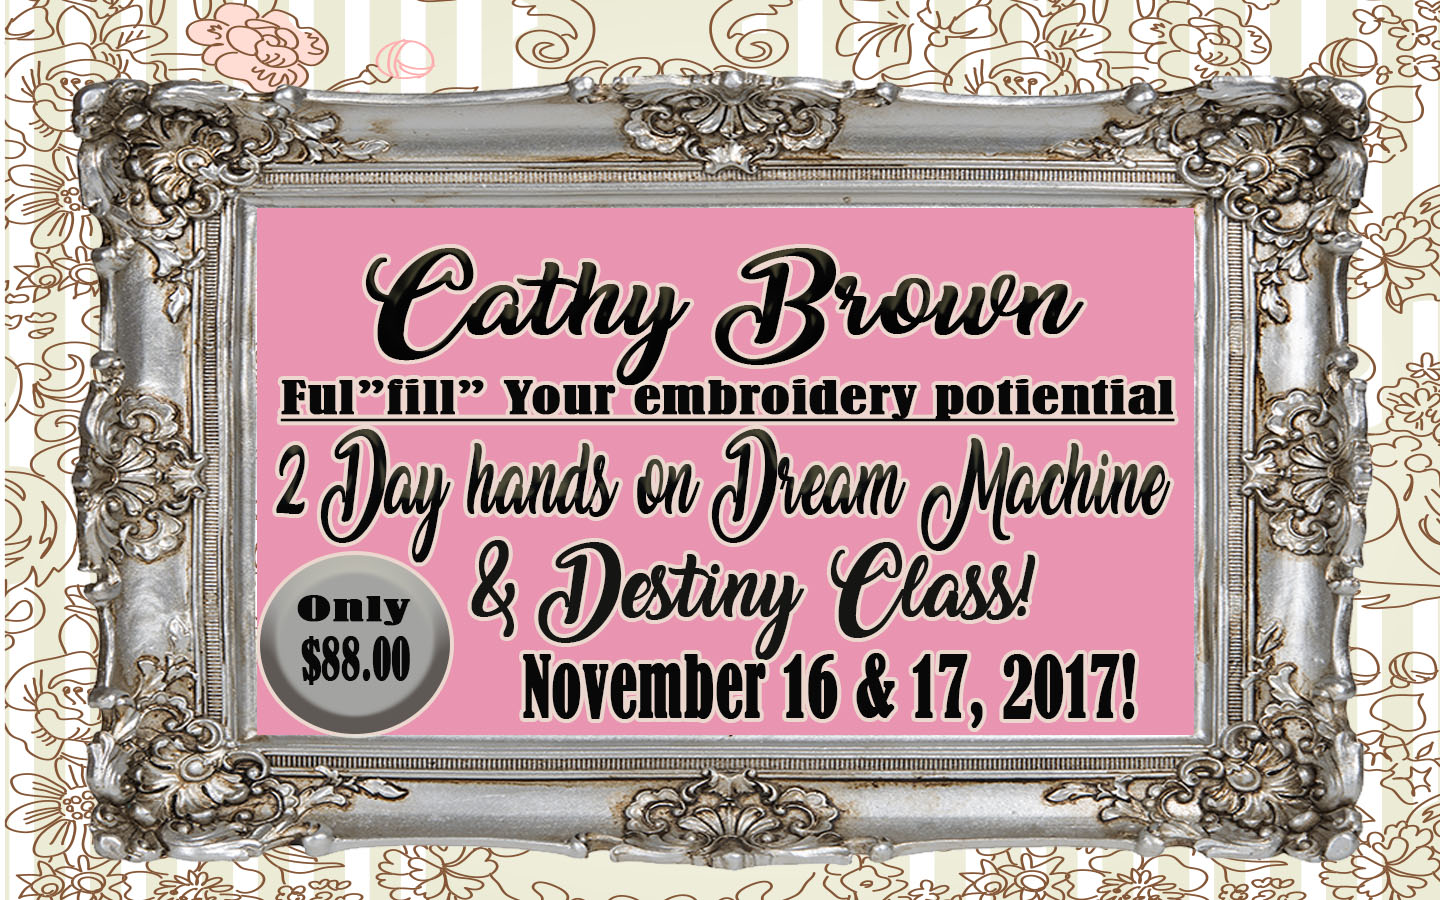 Cathy Brown Dream Machine and Destiny Class